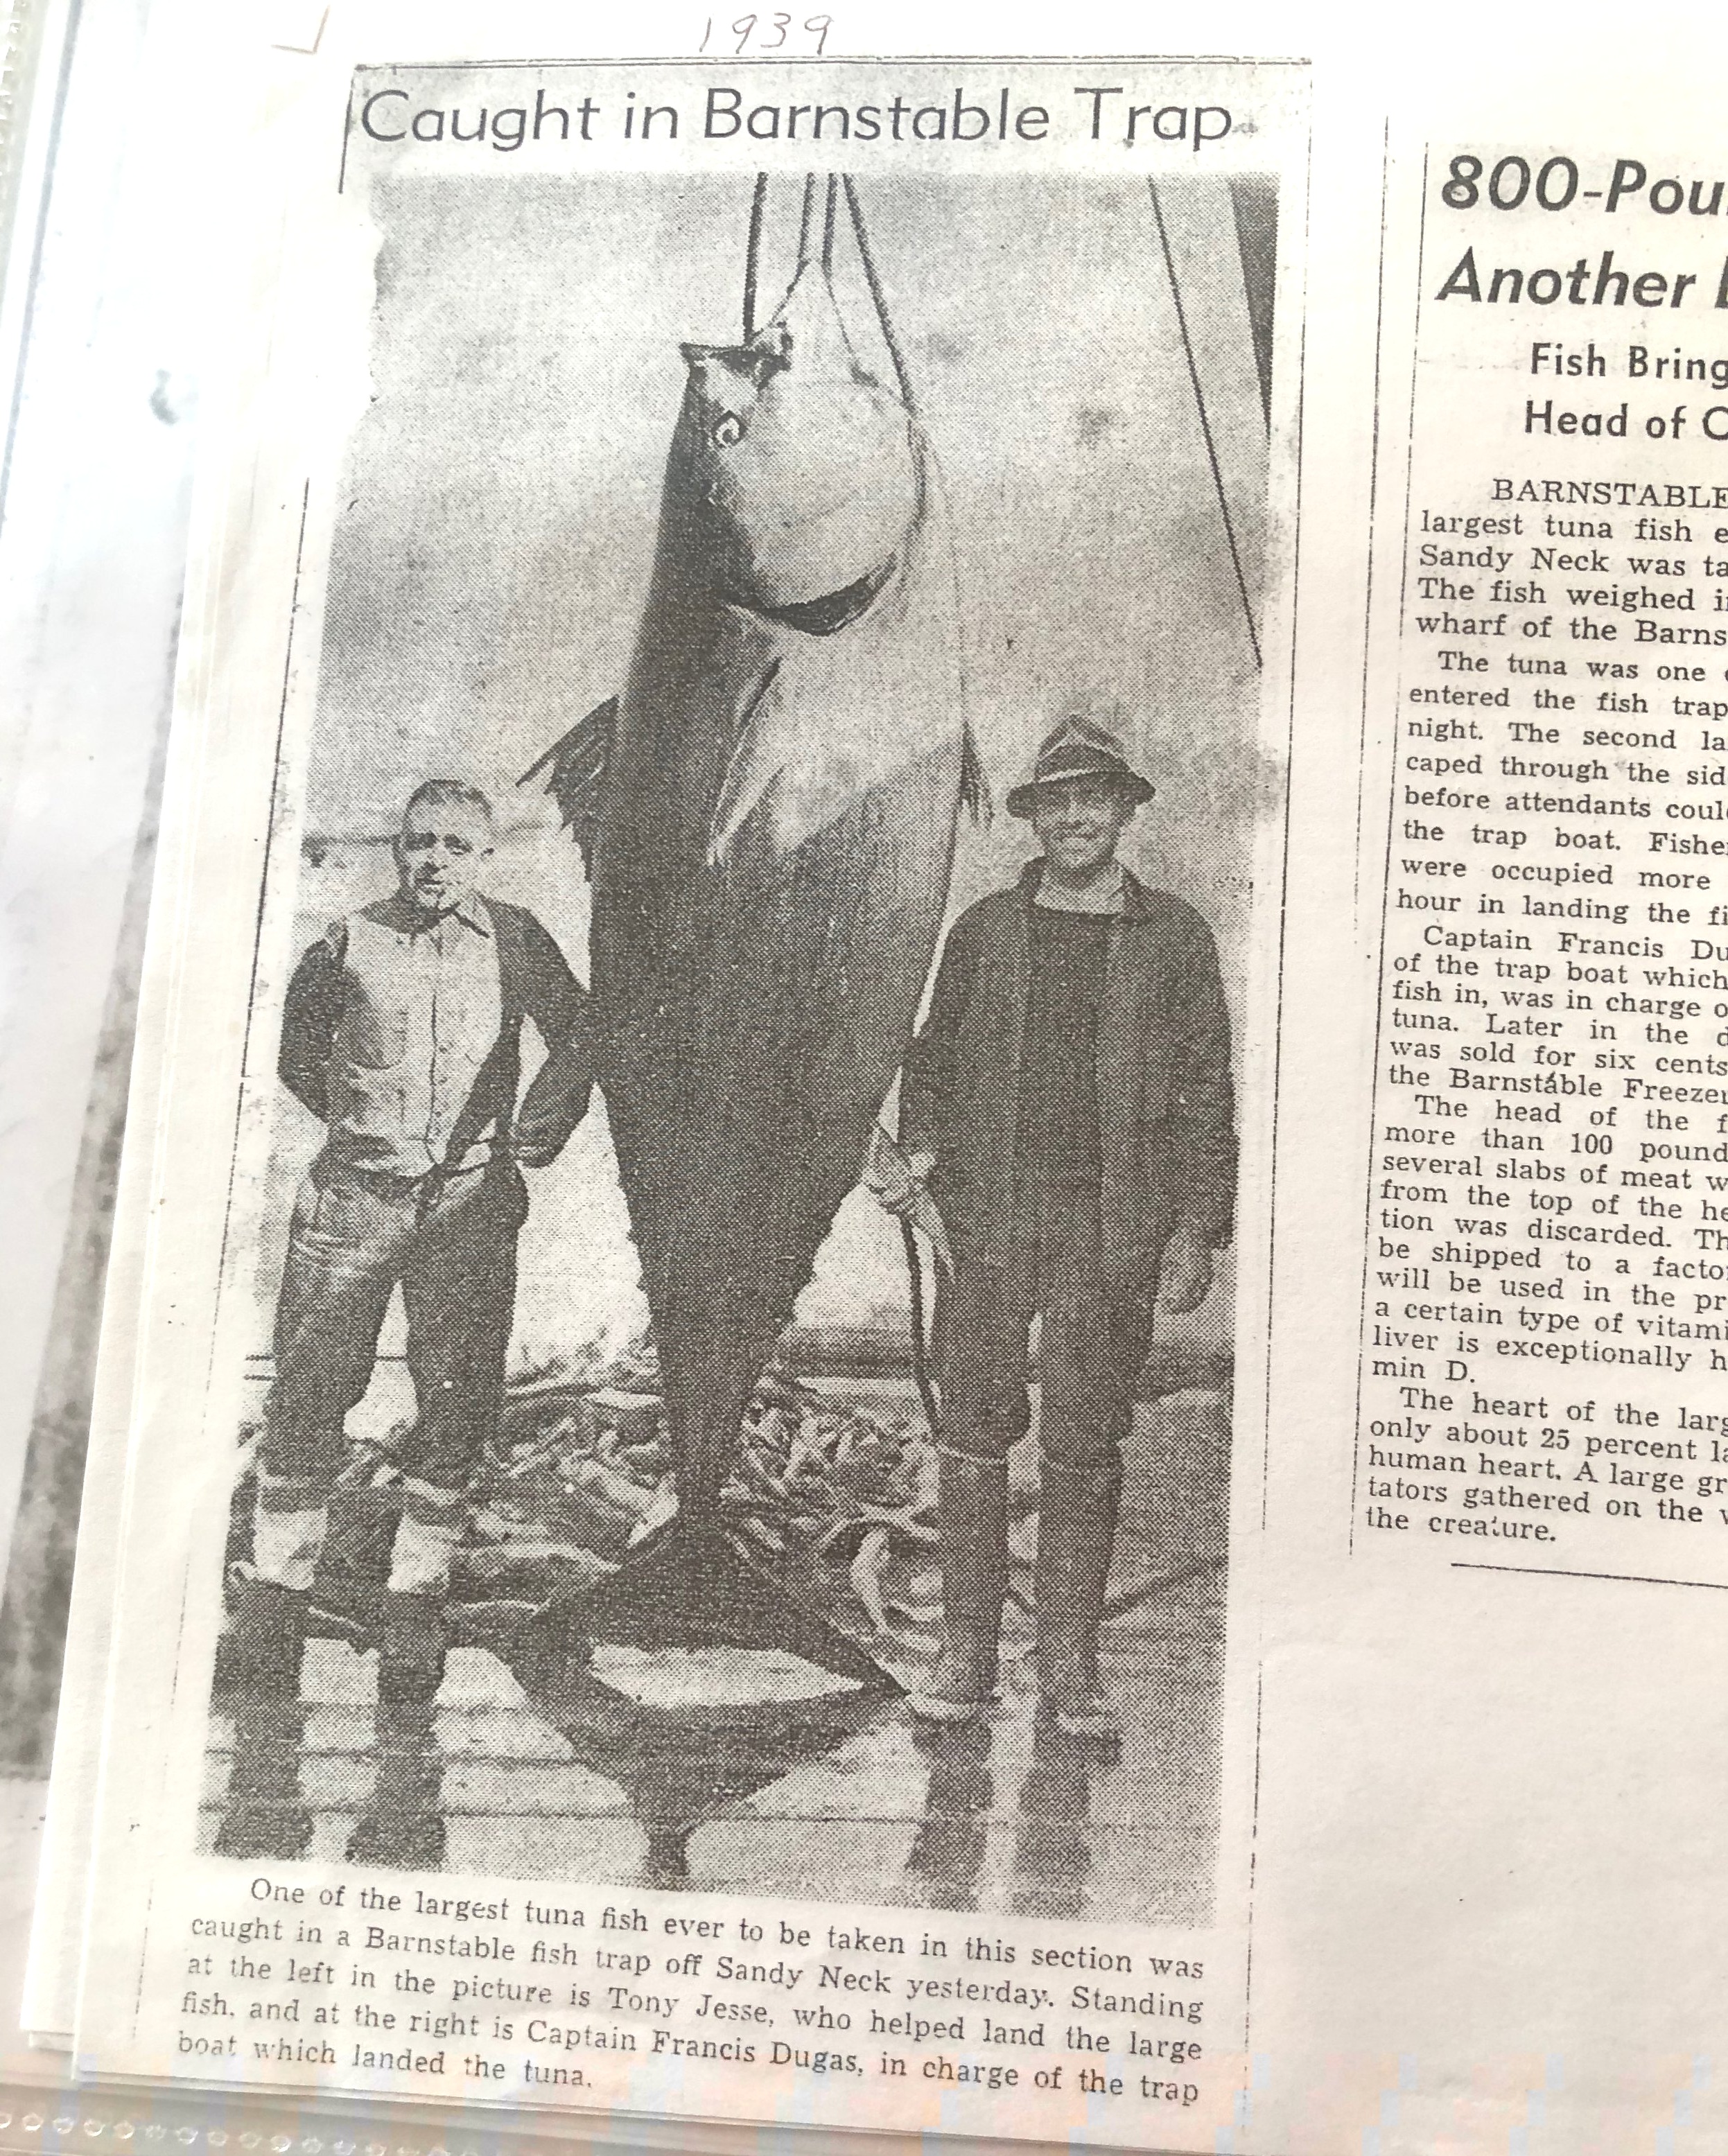 800-pound tuna caught in Barnstable fish trap - Tony Jesse on left Captain Joseph Francis Dugan on right